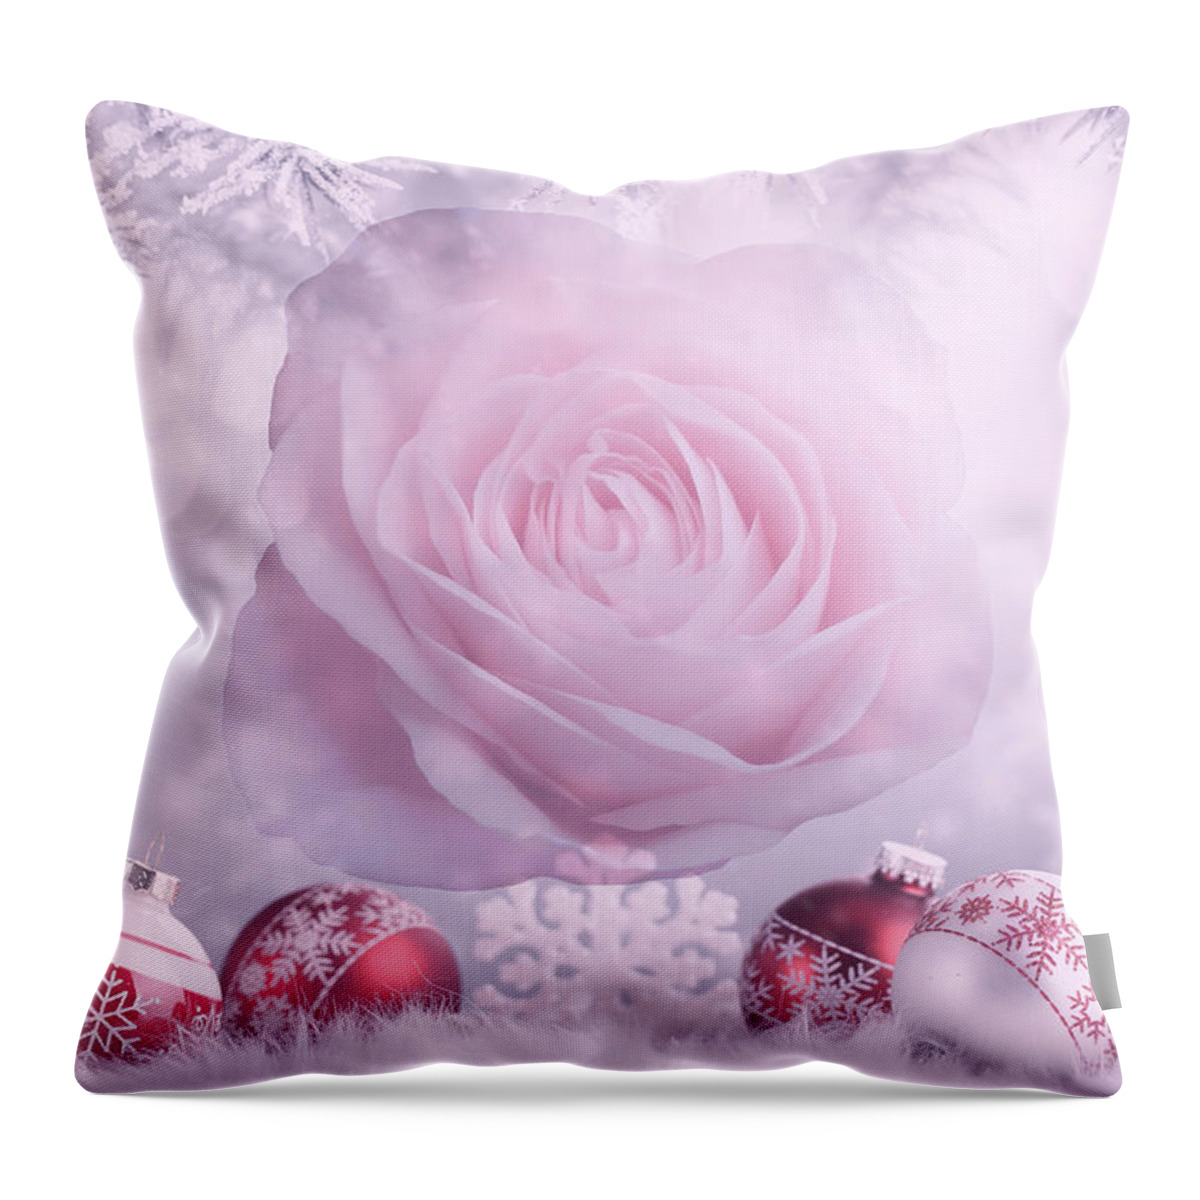 Rose Throw Pillow featuring the mixed media Christmas Rose by Johanna Hurmerinta